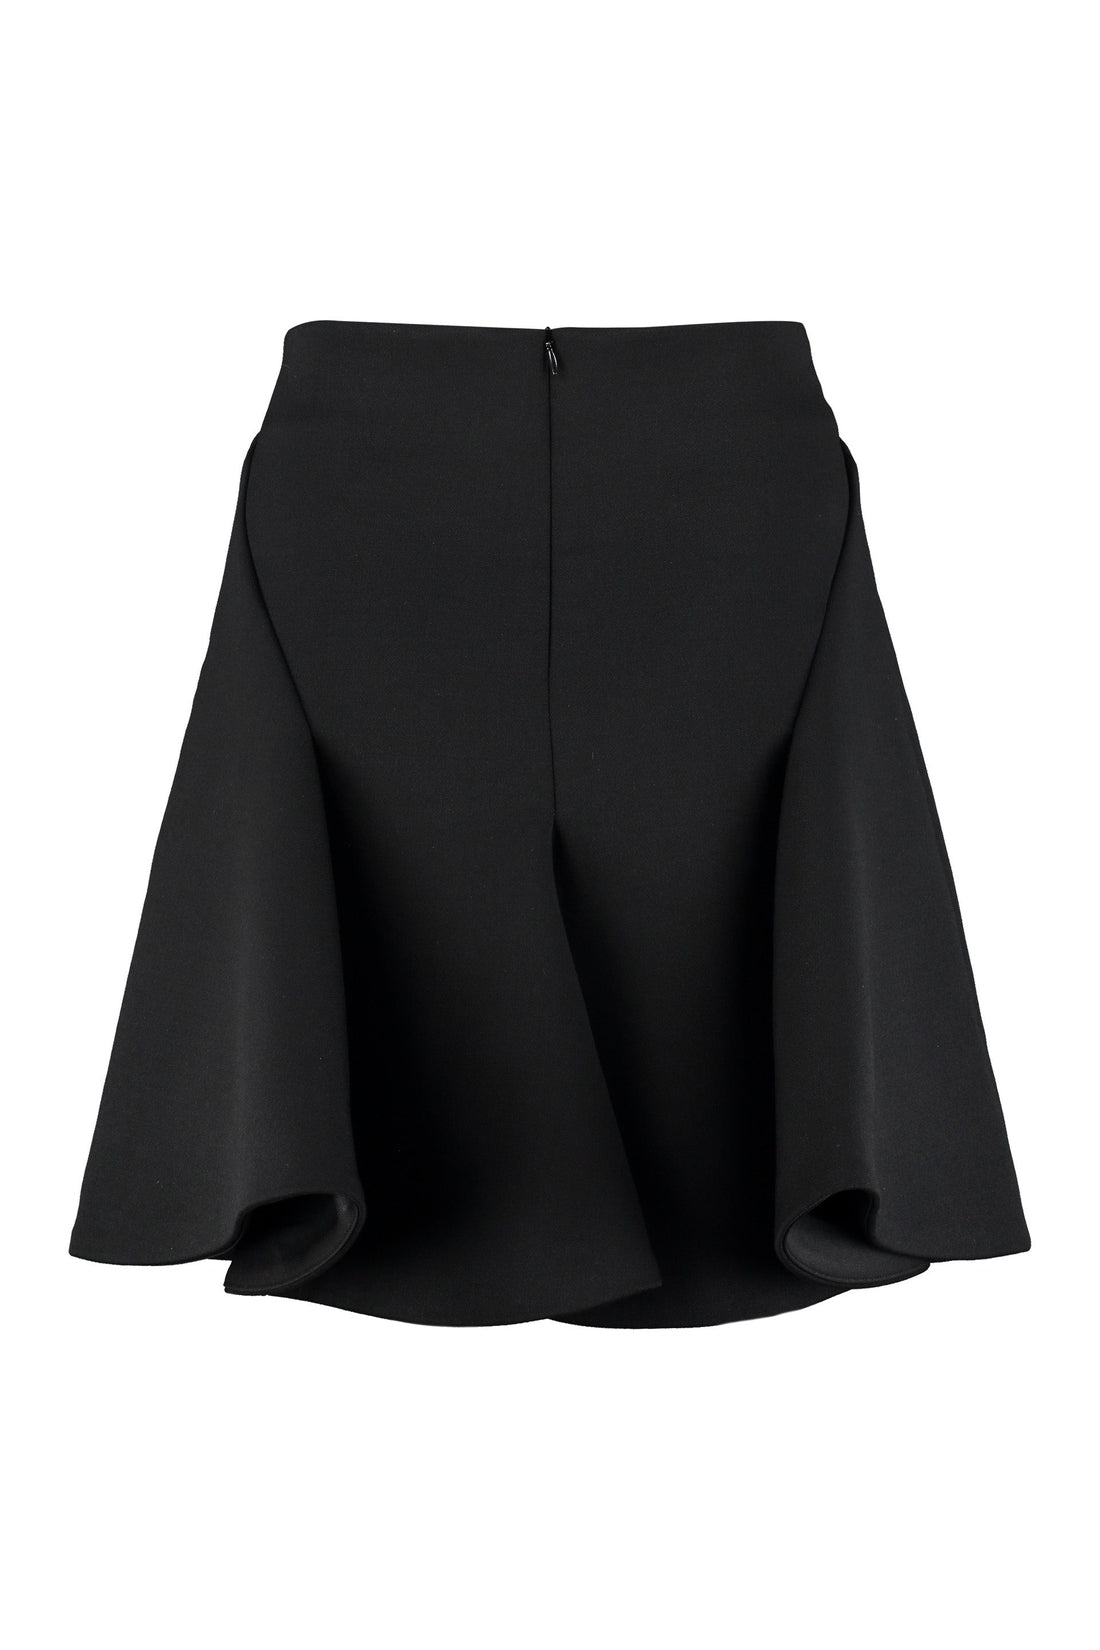 Bottega Veneta-OUTLET-SALE-Wool mini skirt-ARCHIVIST